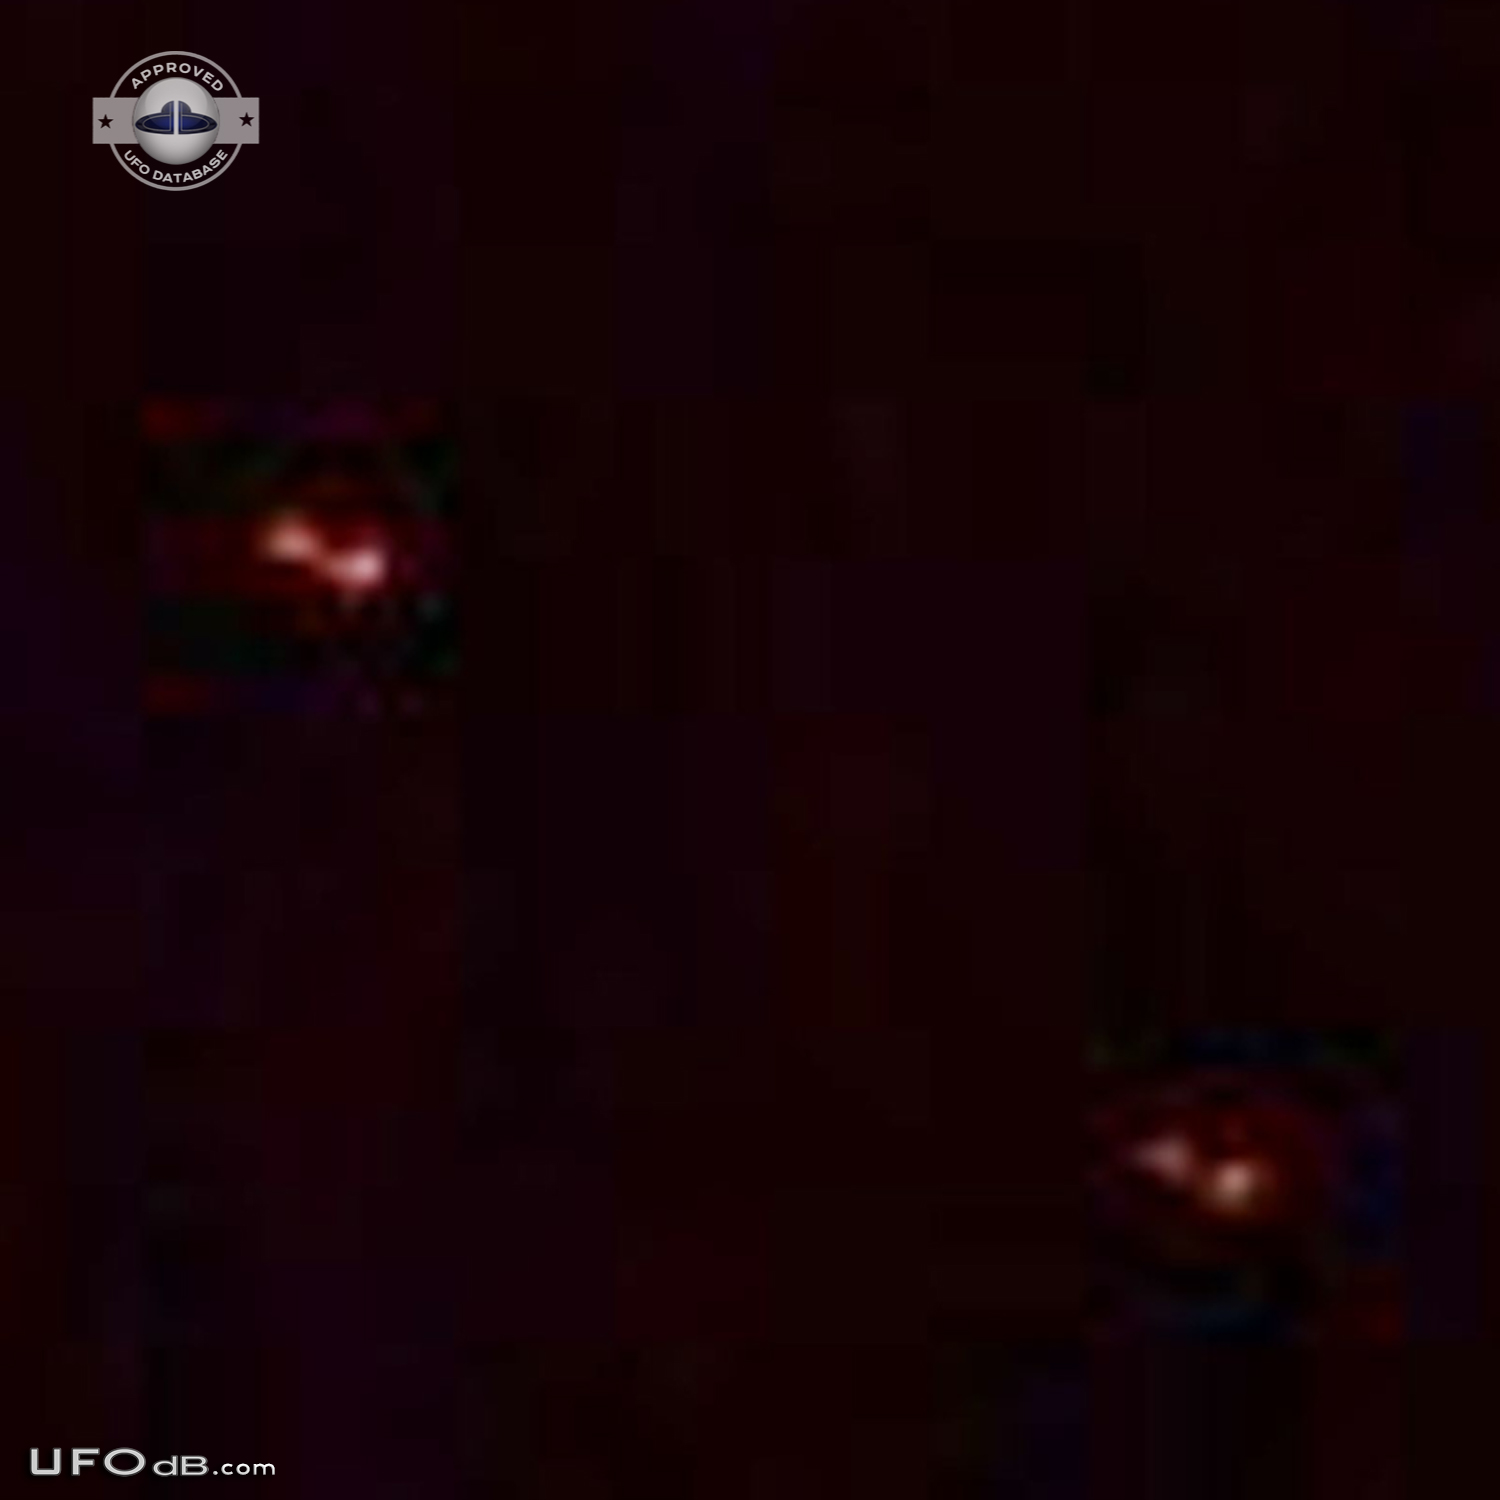 Fleet of 10 to 20 Orange UFOs seen in Sandusky, Ohio - Picture 2012 UFO Picture #427-3